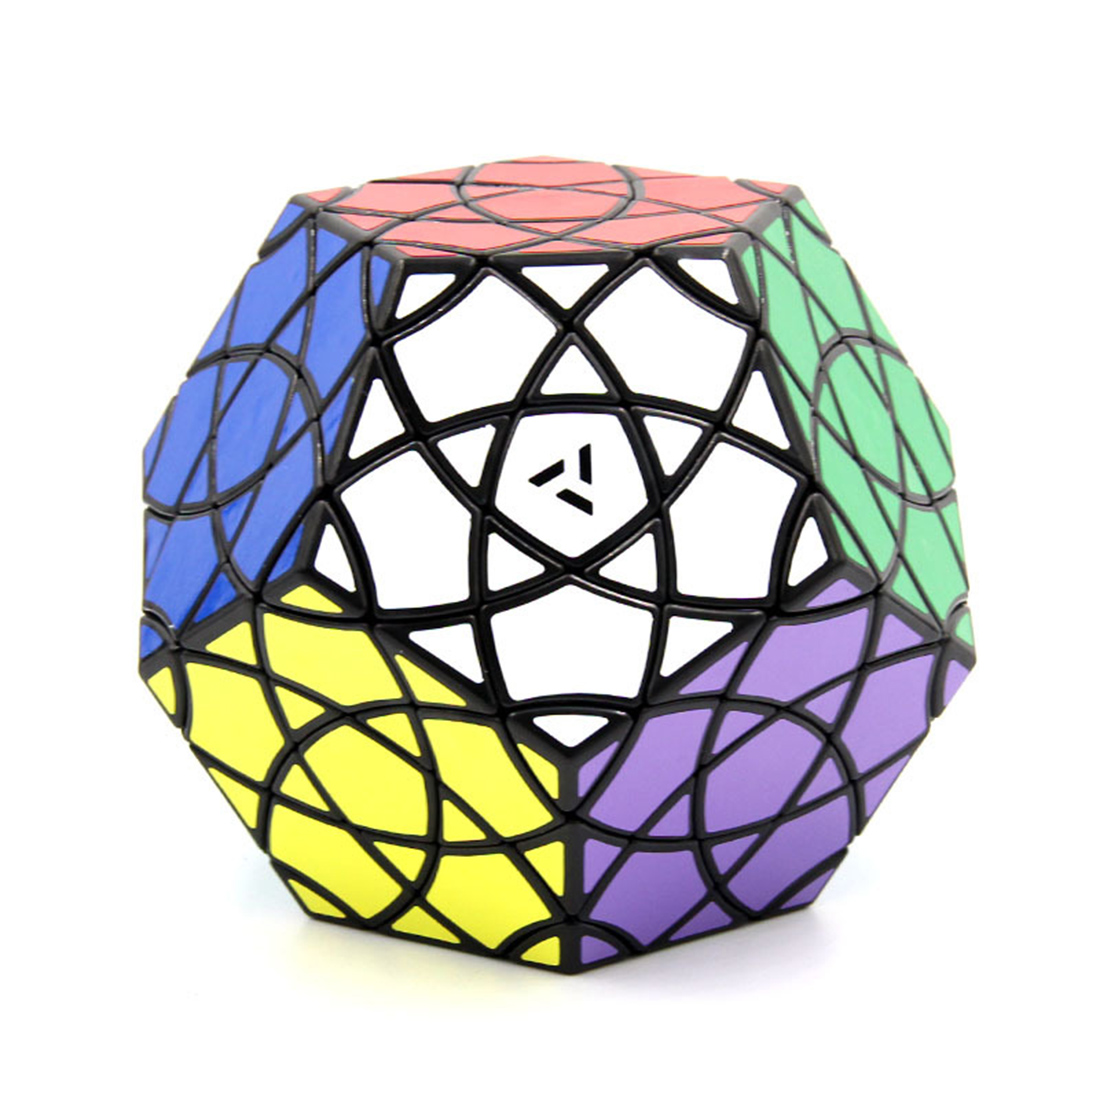 WitEden Golden Bauhinia Megaminx Magic Cube with Colorful Stickers